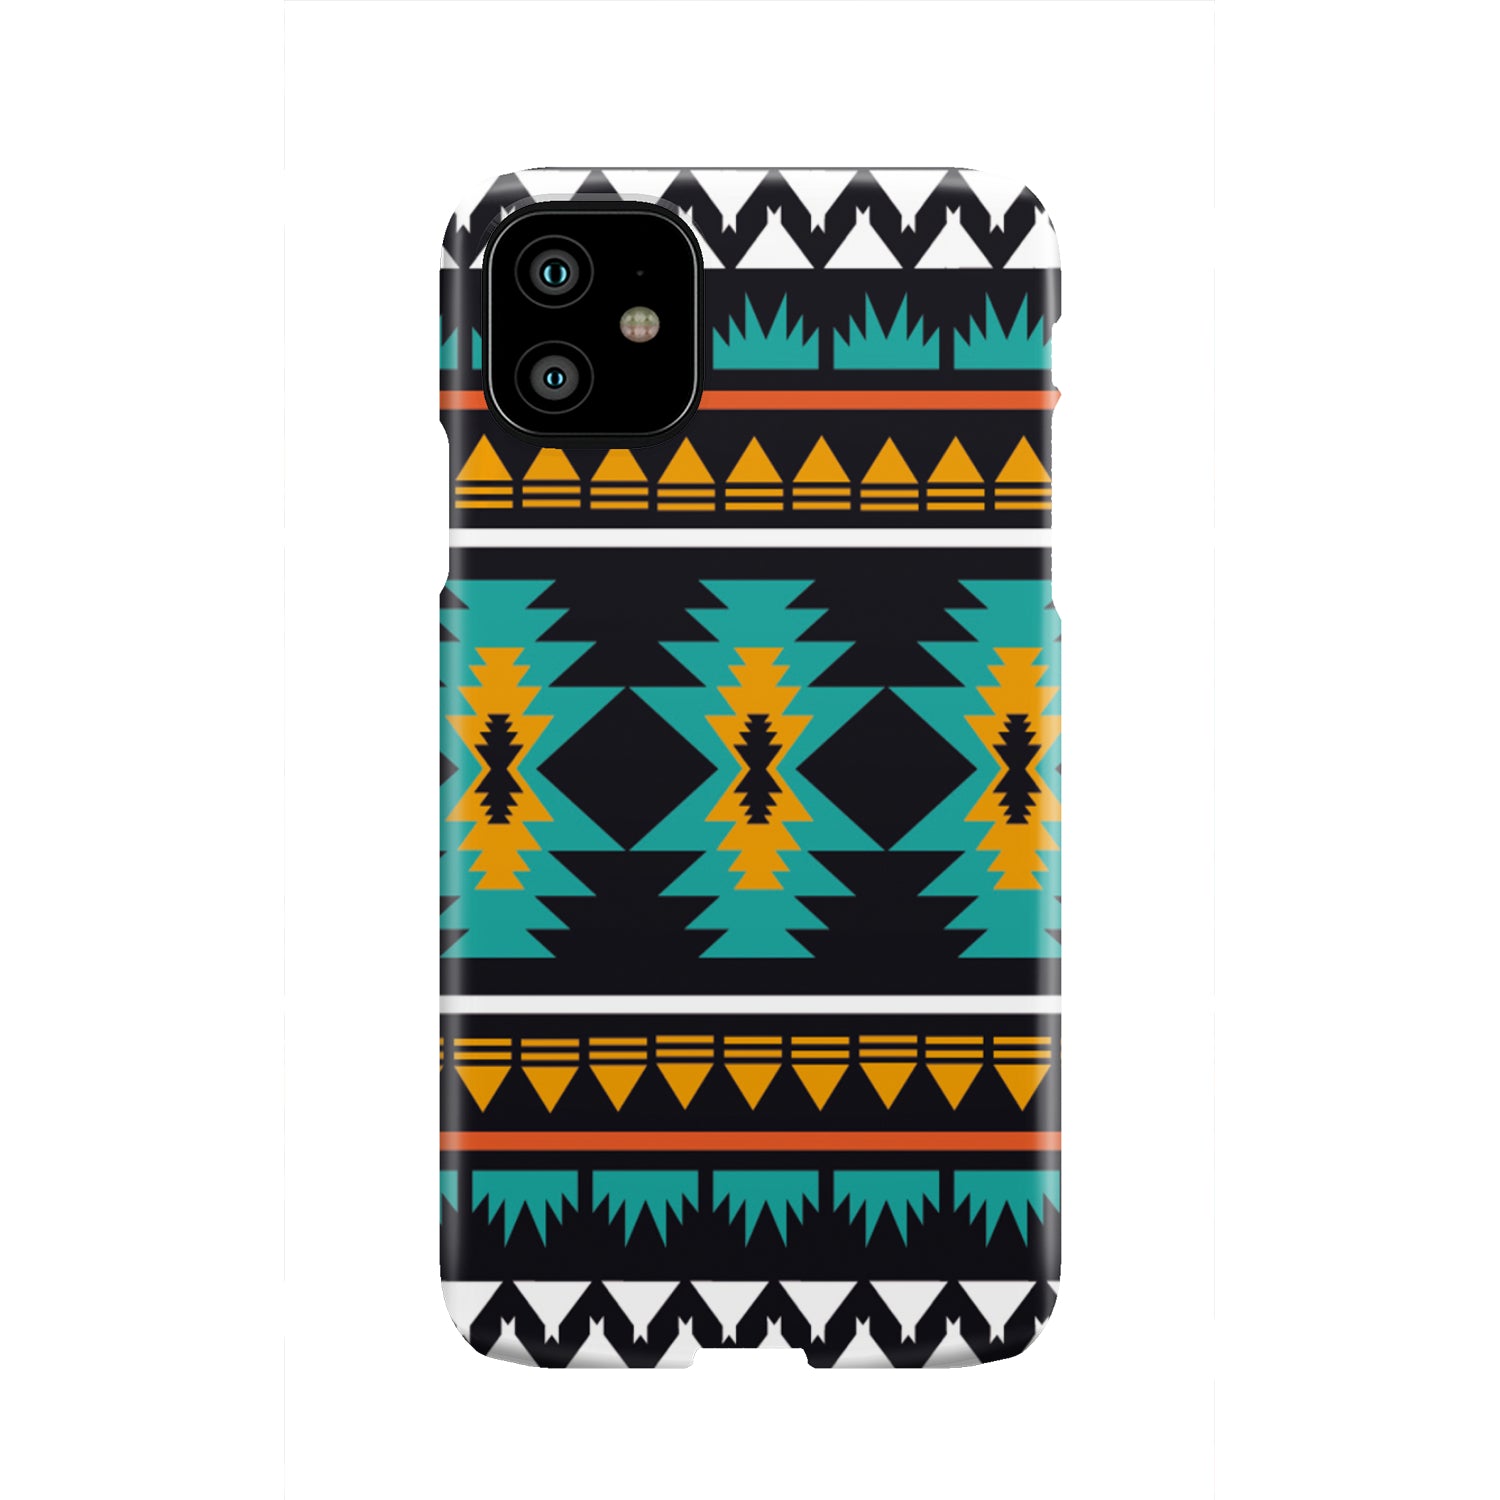 Powwow Store gb nat00605 geometric ethnic pattern phone case